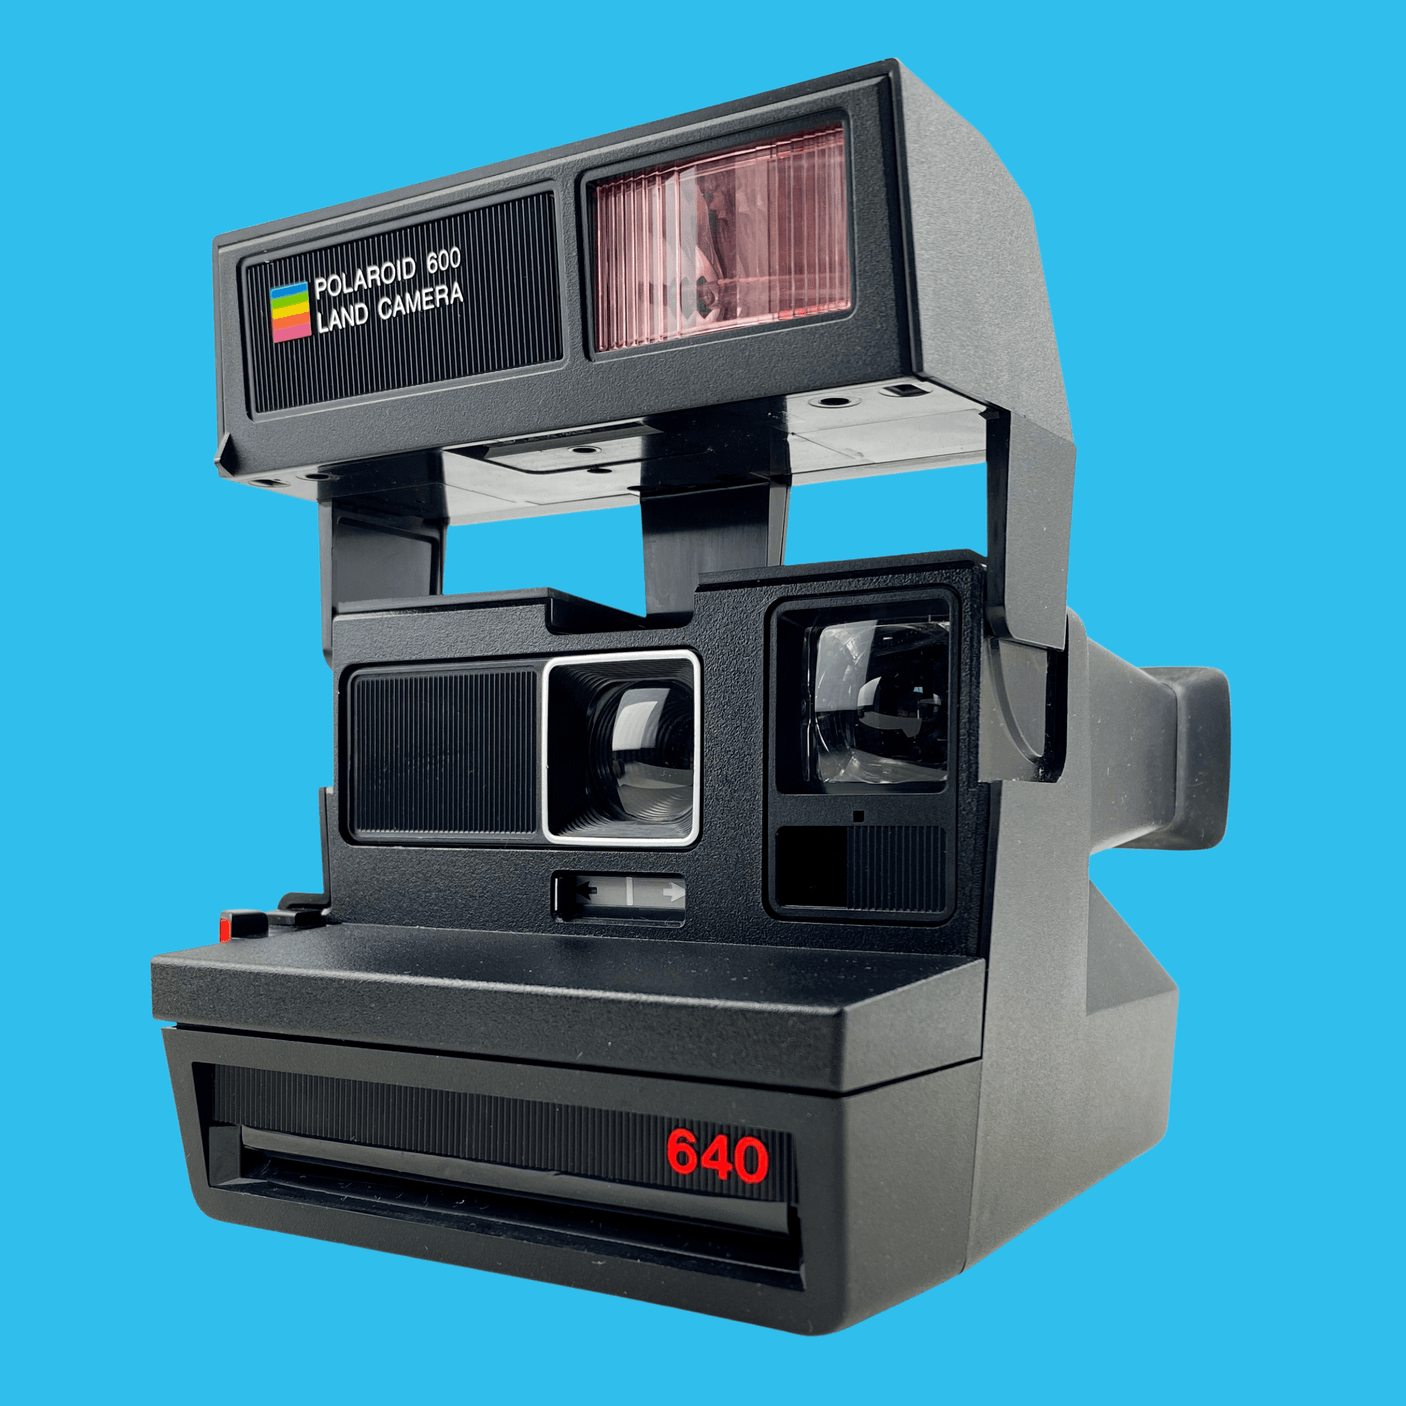 Polaroid Sun 640 Instant Film Camera (Boxed)